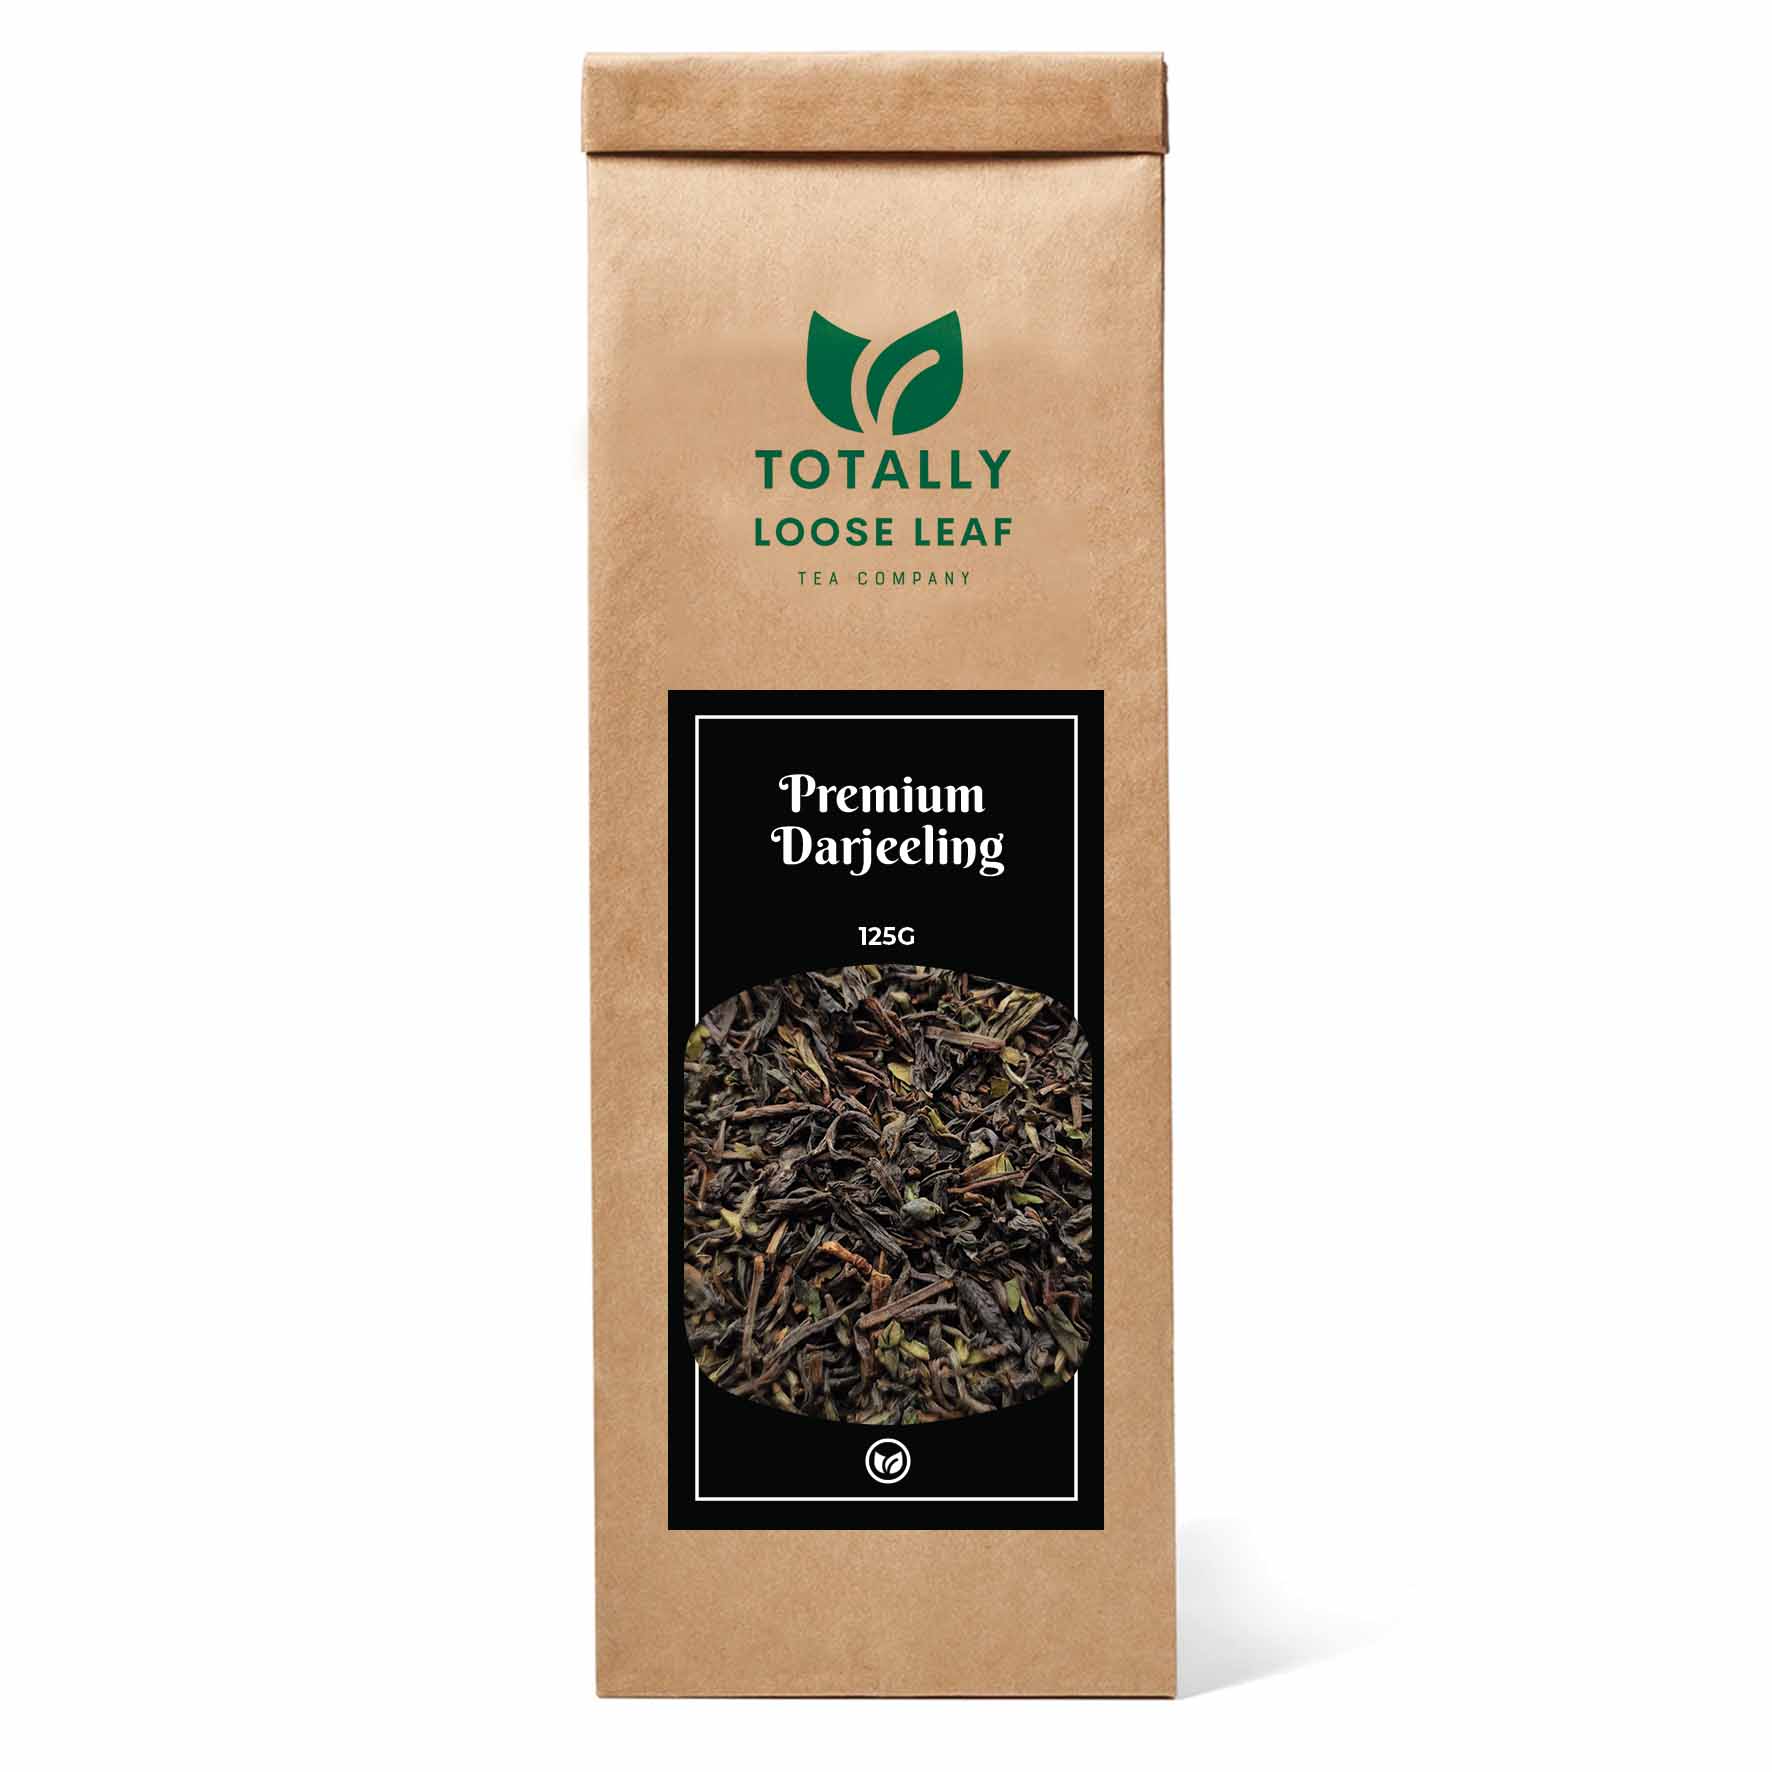 Premium Darjeeling Black Estate Loose Leaf Tea - one pouch